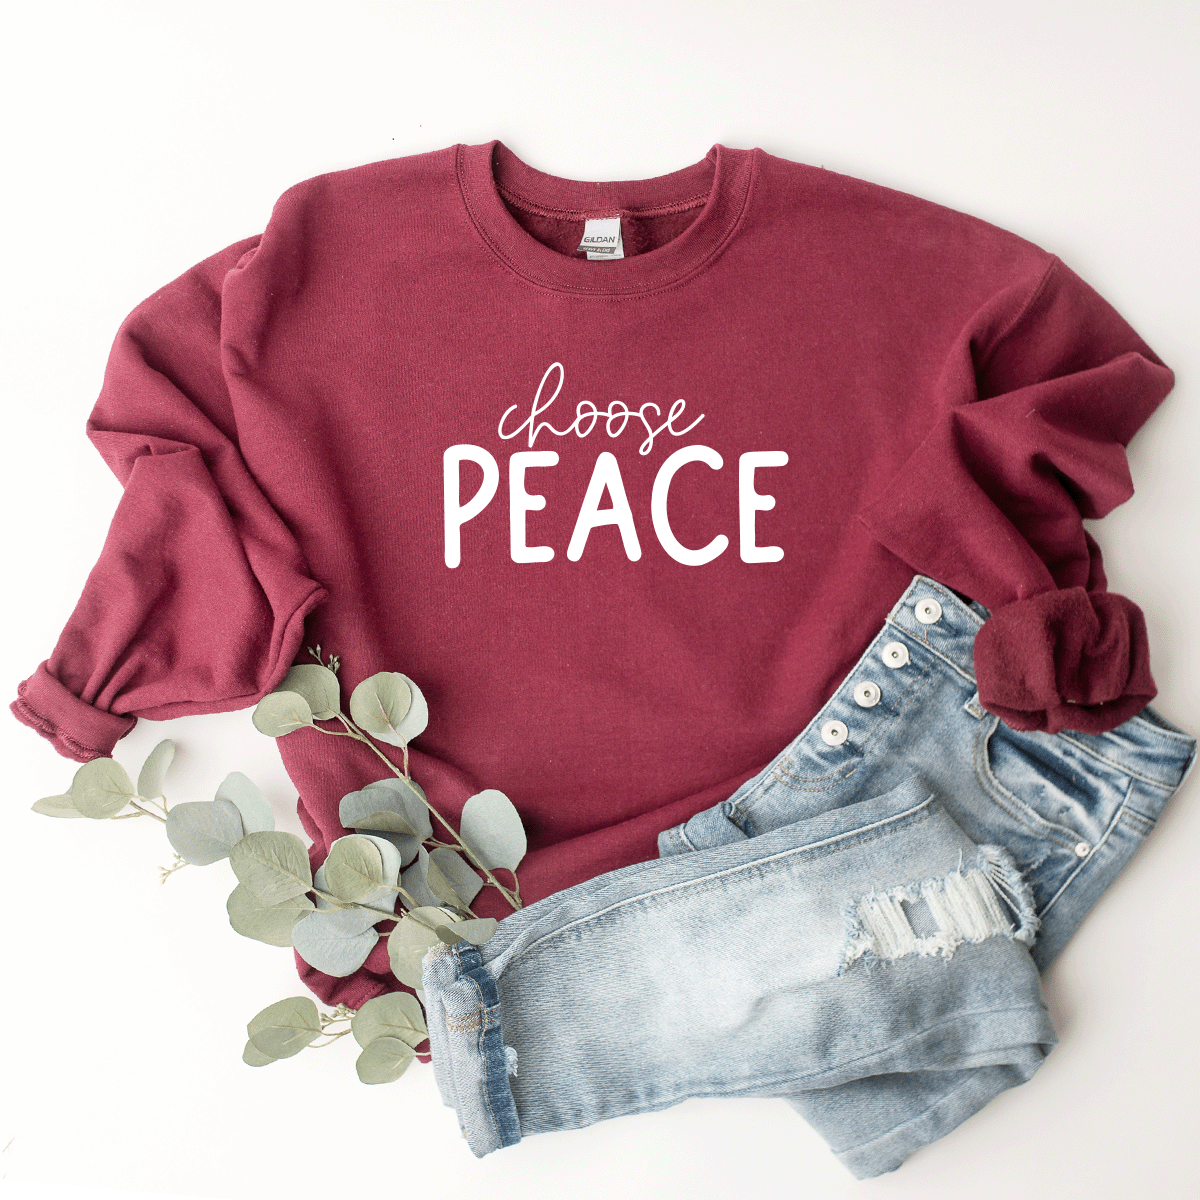 Choose Peace - Sweatshirt